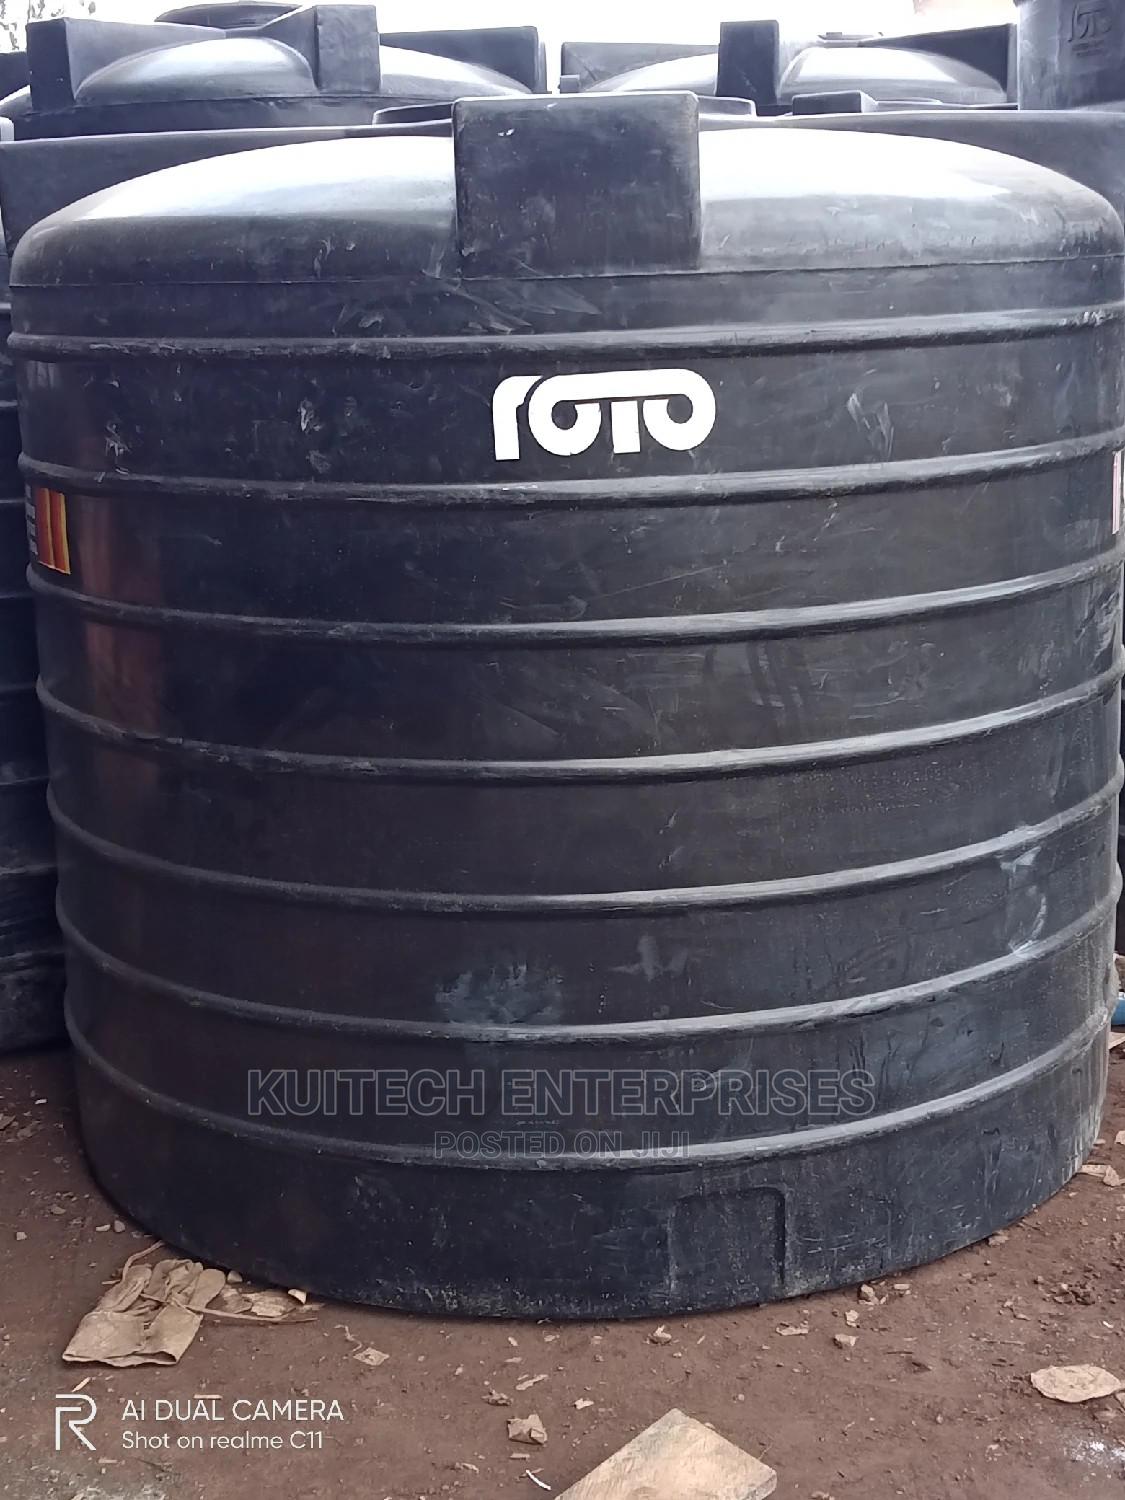 Roto tanks 4600 Litre Water Tank Price In Kenya